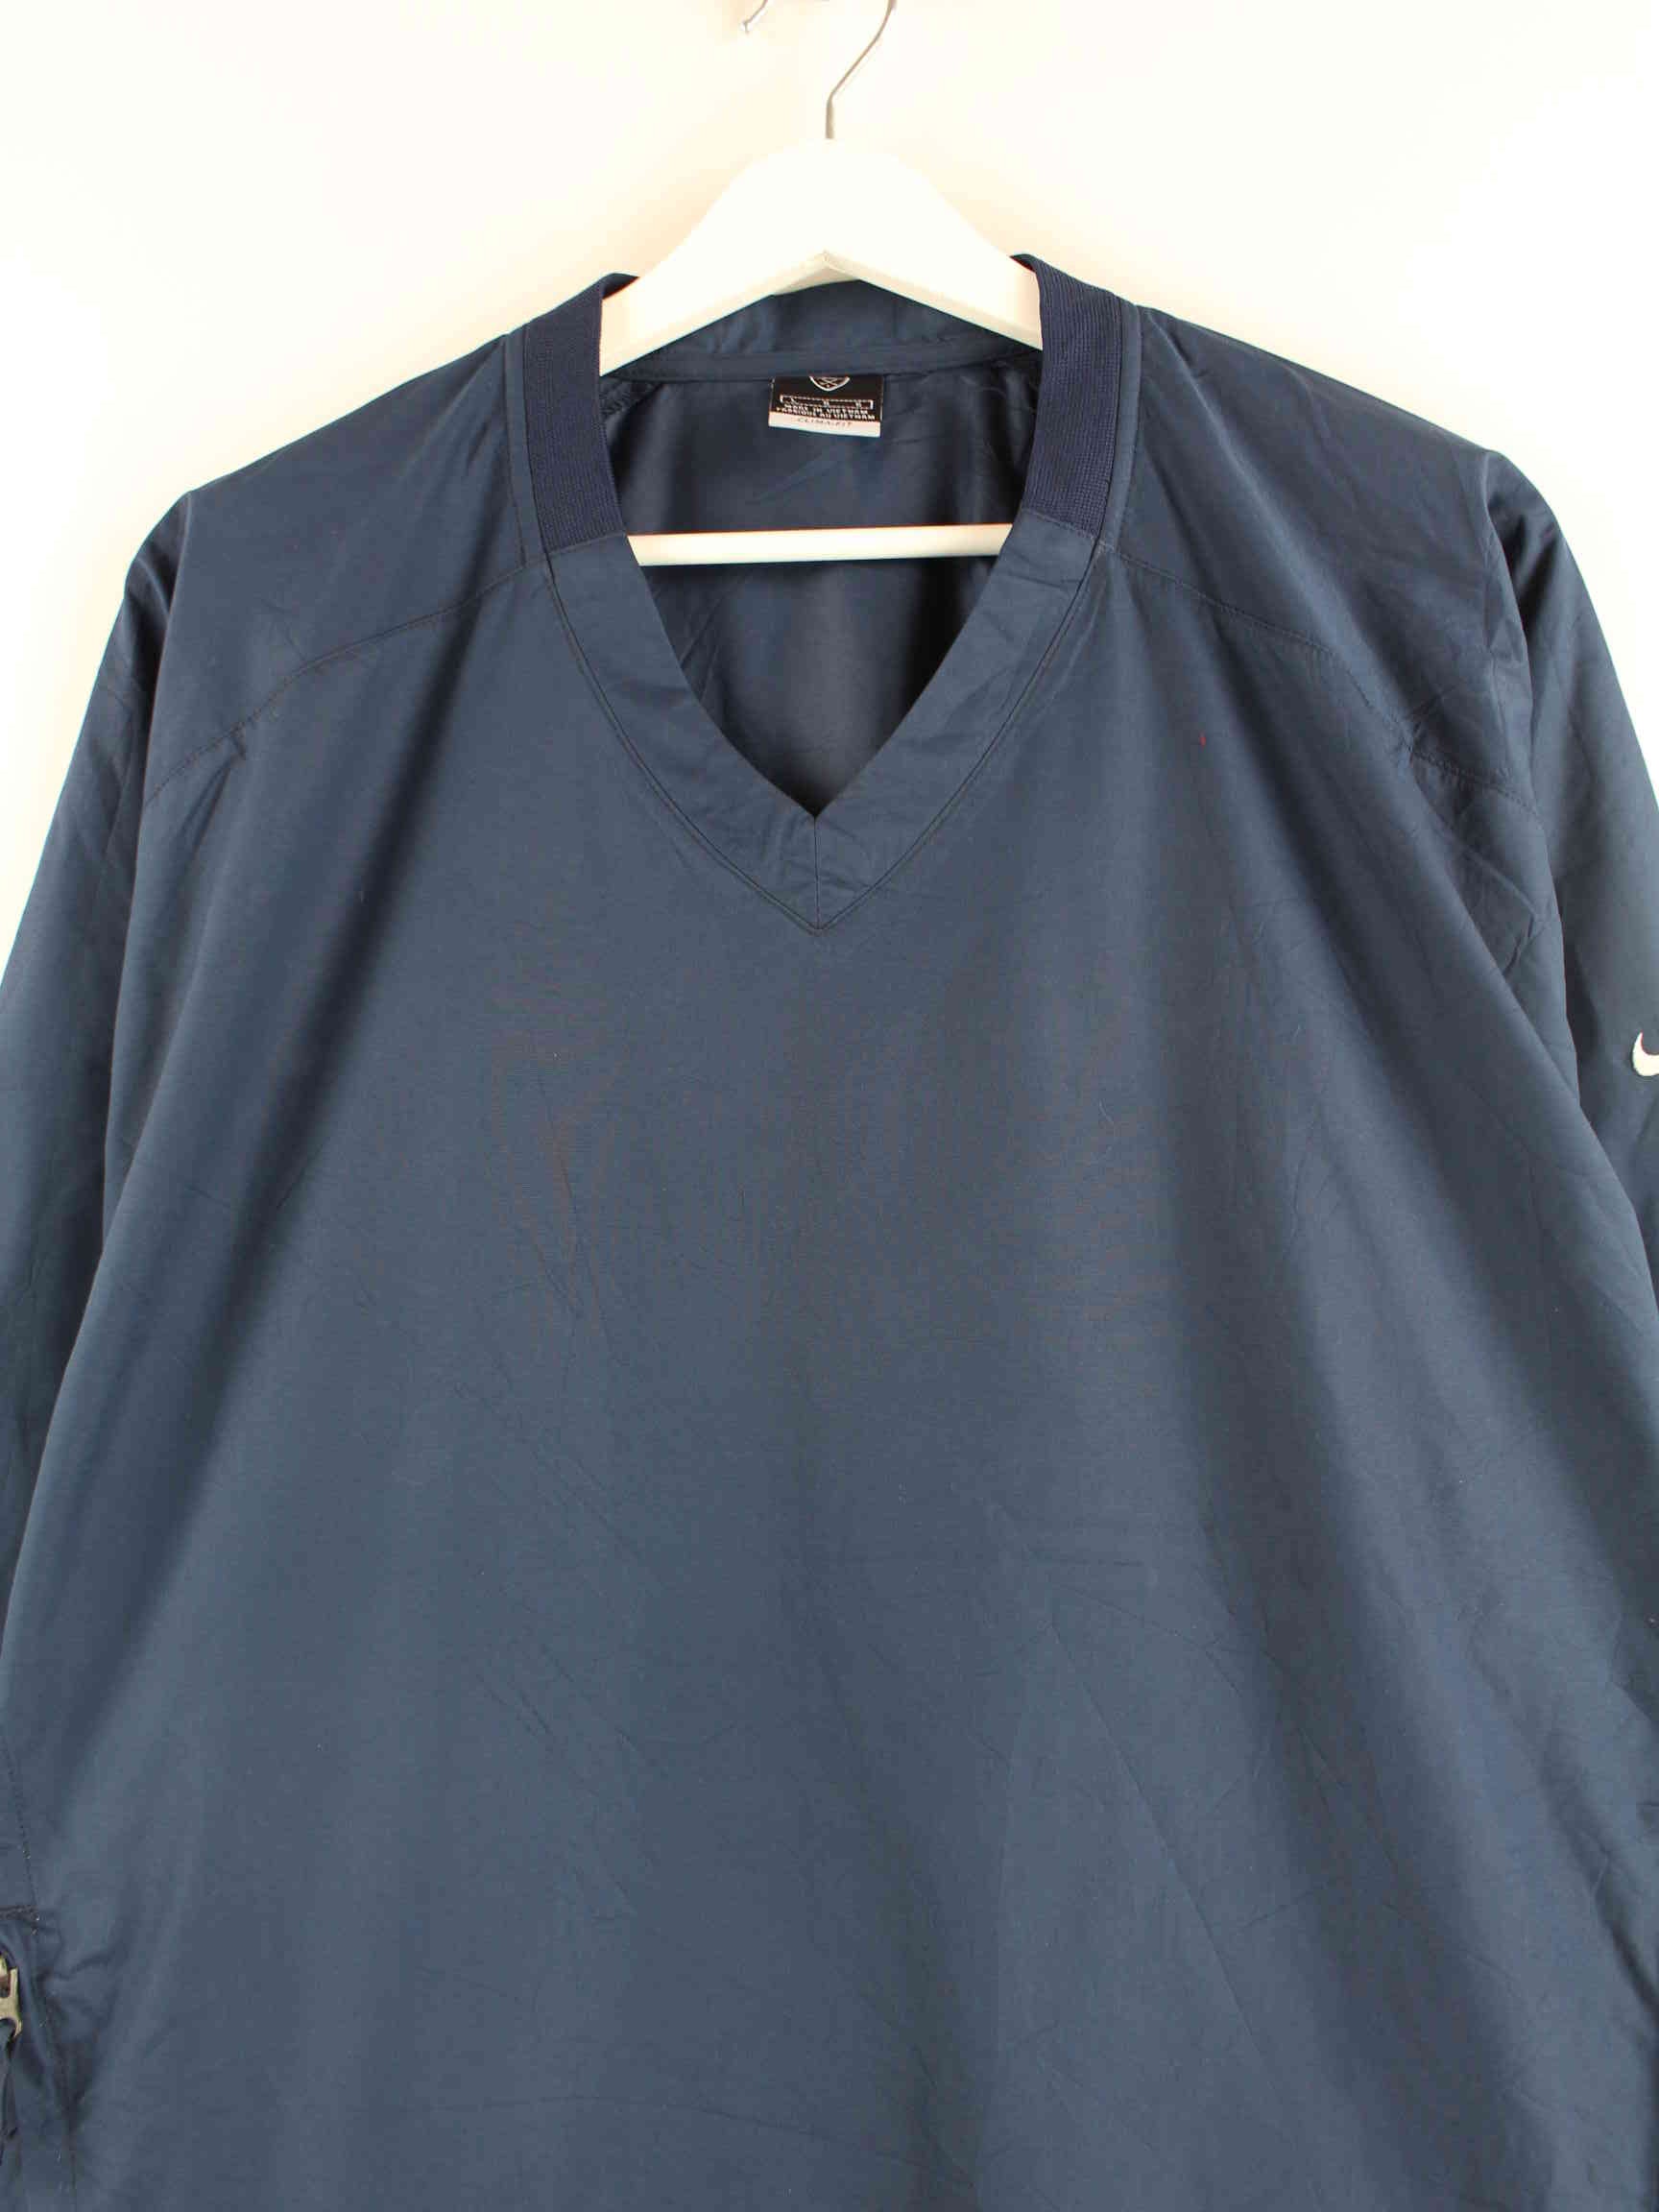 Nike Golf Track Top Sweater Blau L (detail image 1)